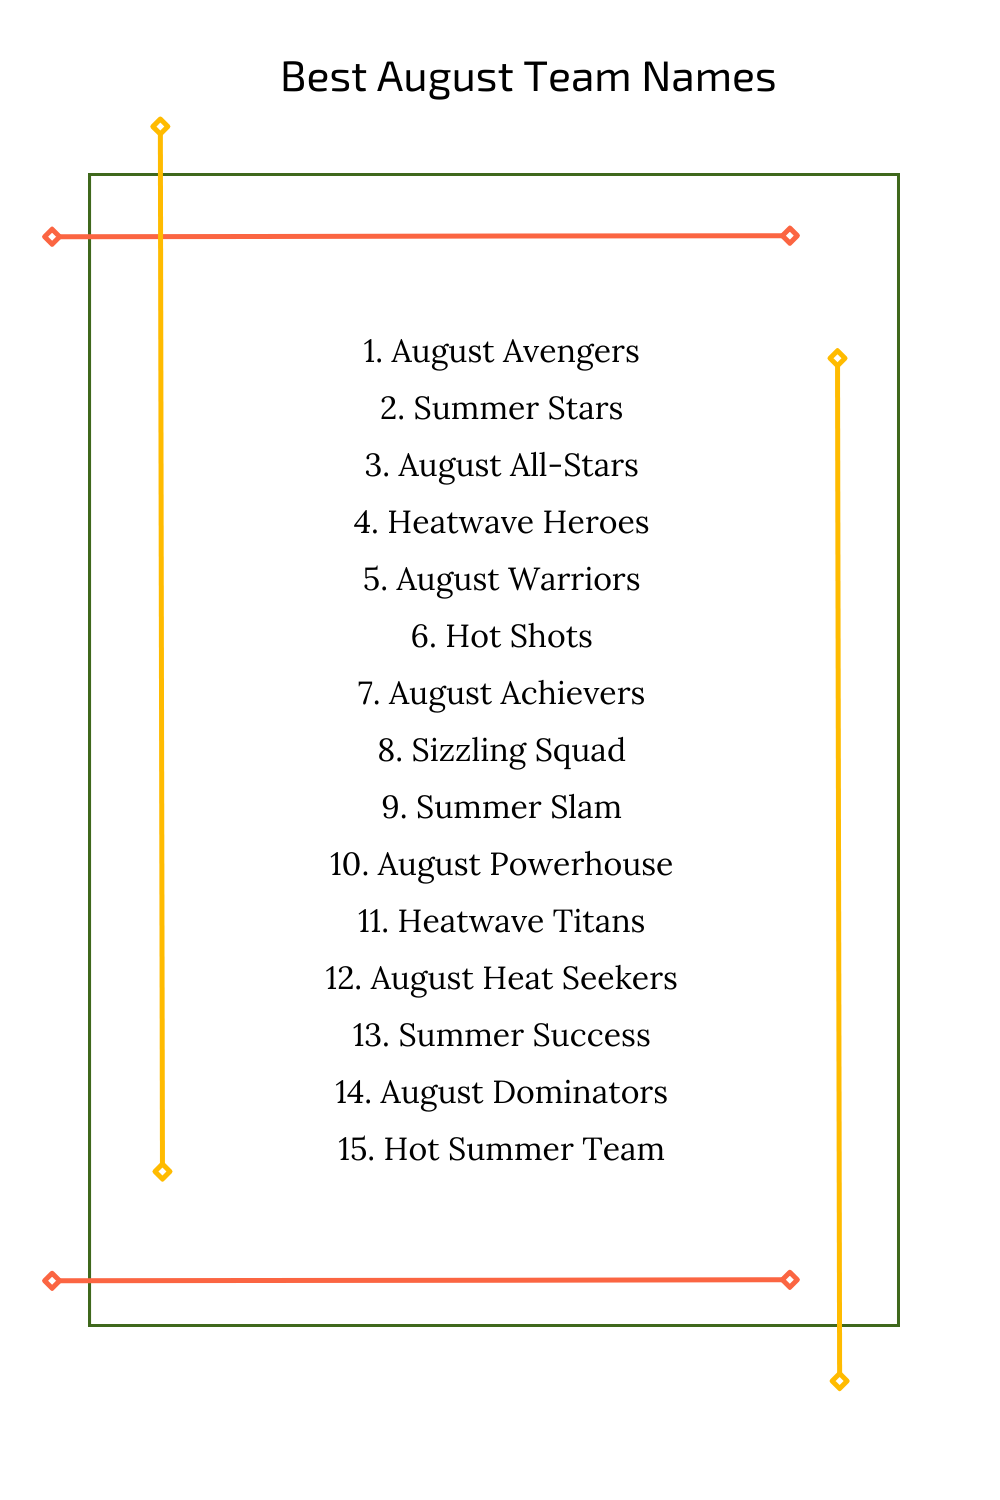 Best August Team Names